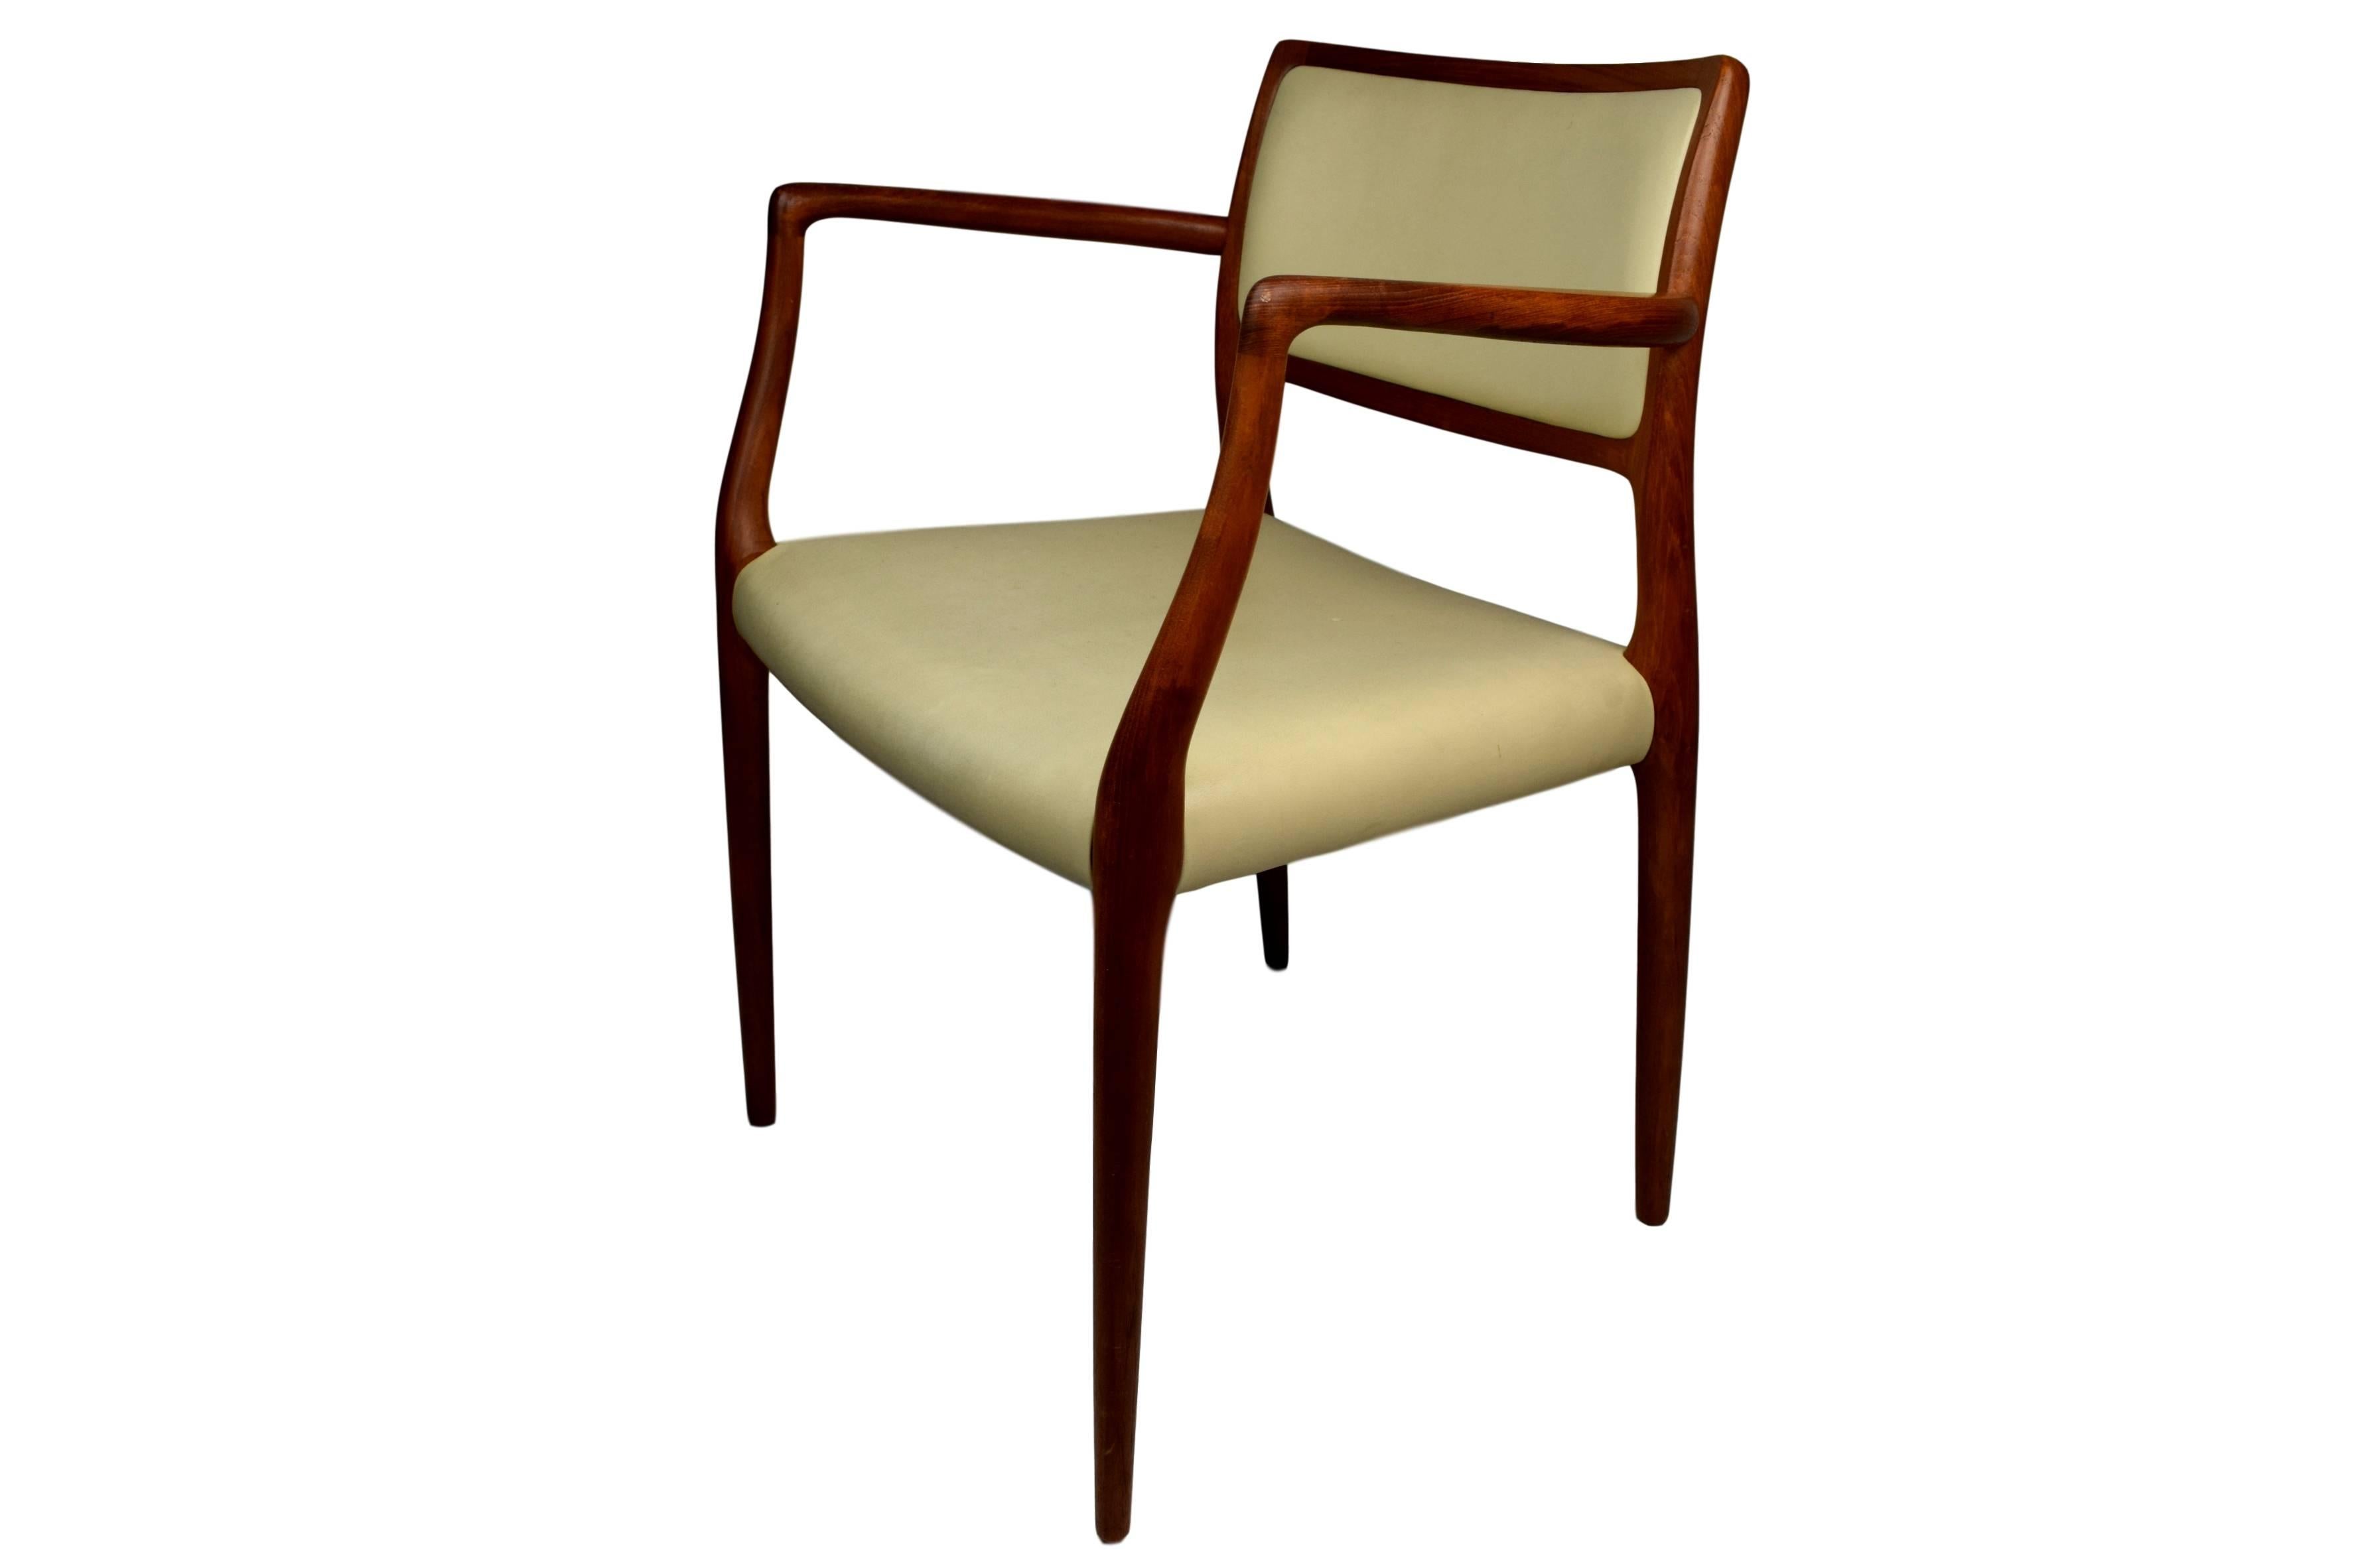 An armchair by Niels O. Møller. Model 65. Teak frame upholstered with beige leather. Design from 1968. Produced by J.L. Møllers Møbelfabrik. Stamped 